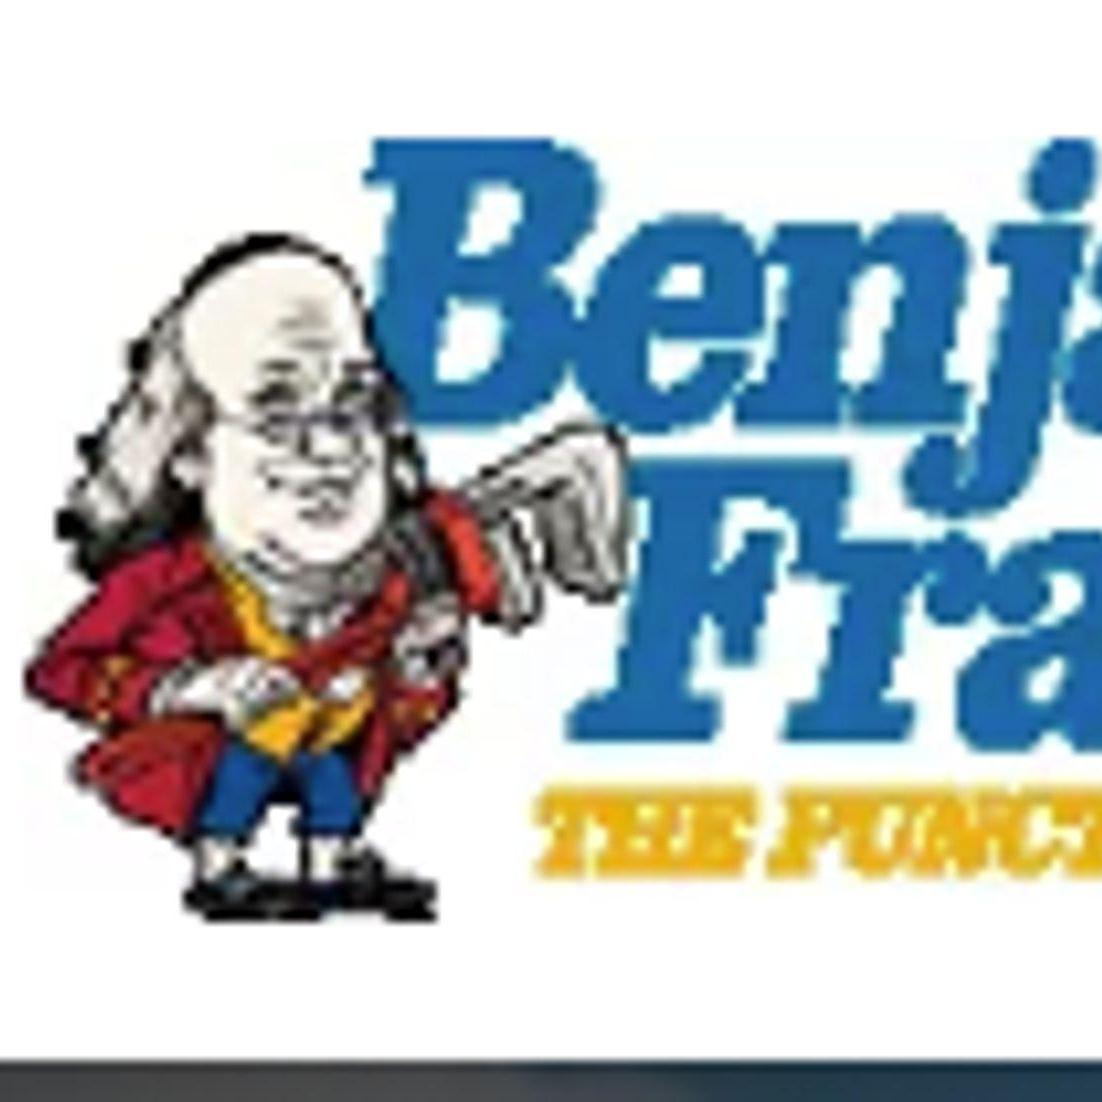 Benjamin Franklinplumbing